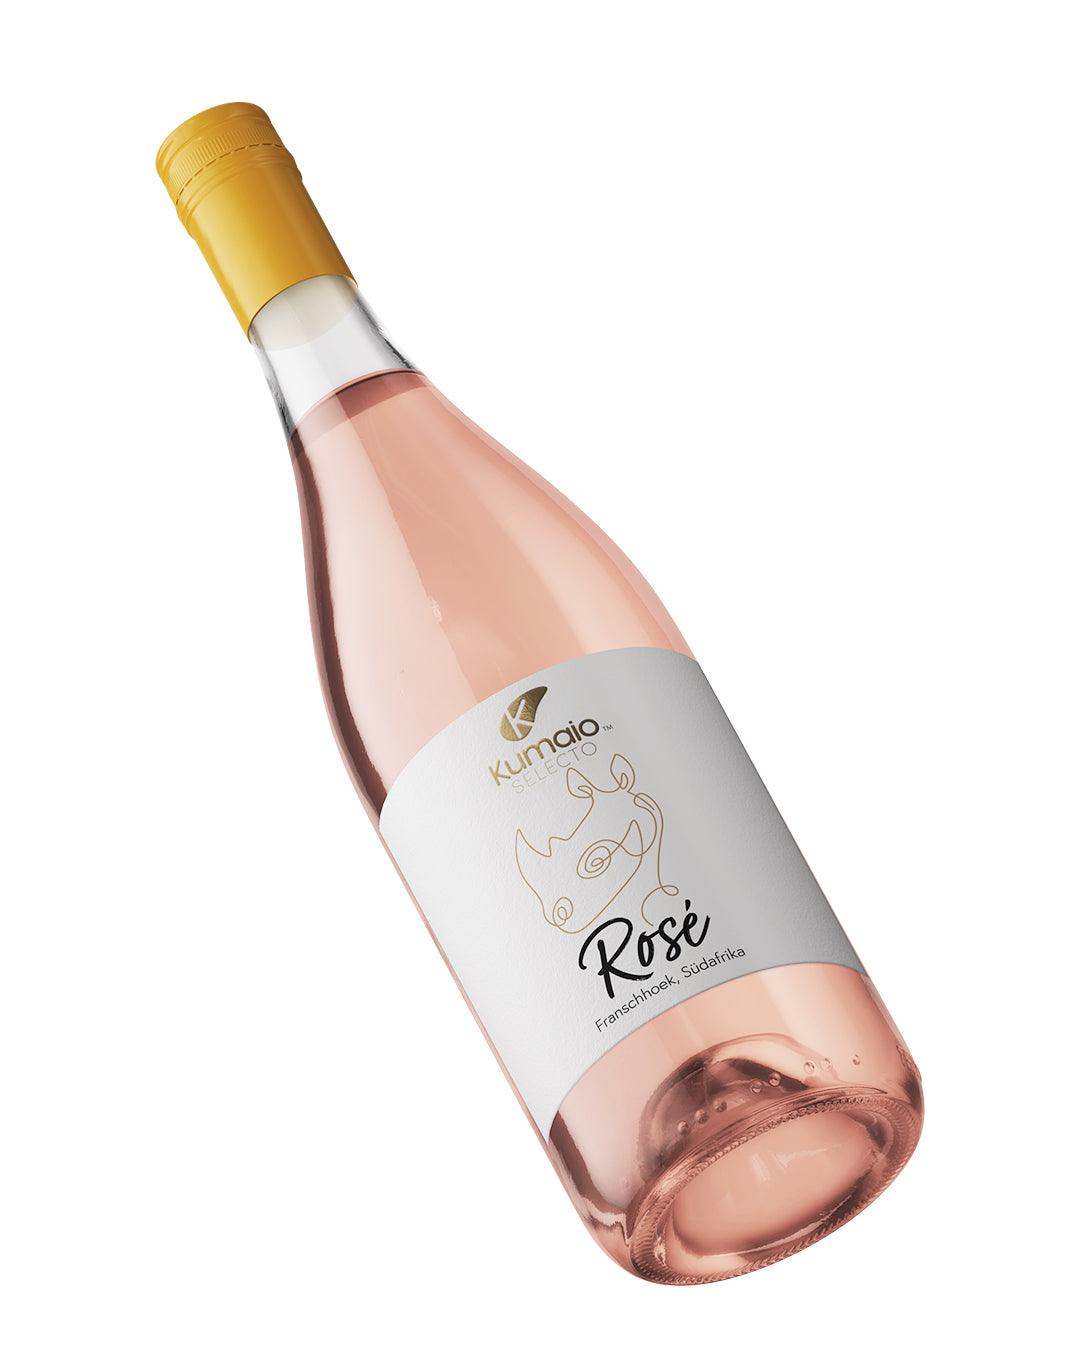 ROSÉ – Kumaio™ Selecto Wein